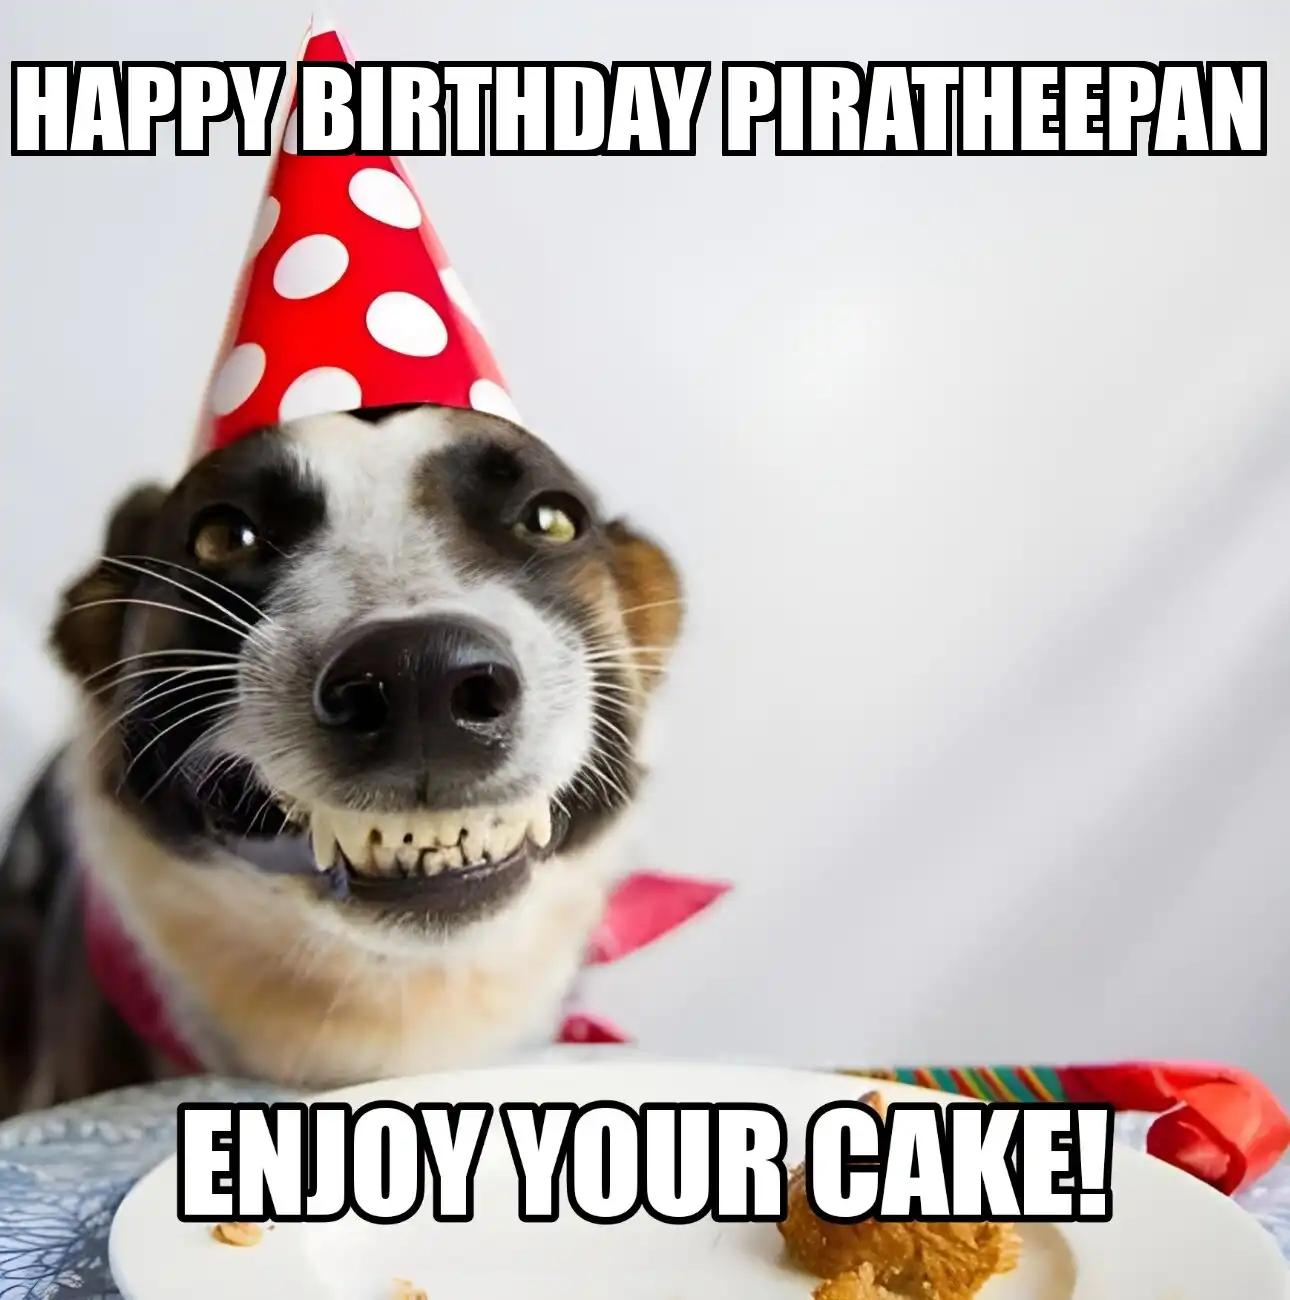 Happy Birthday Piratheepan Enjoy Your Cake Dog Meme